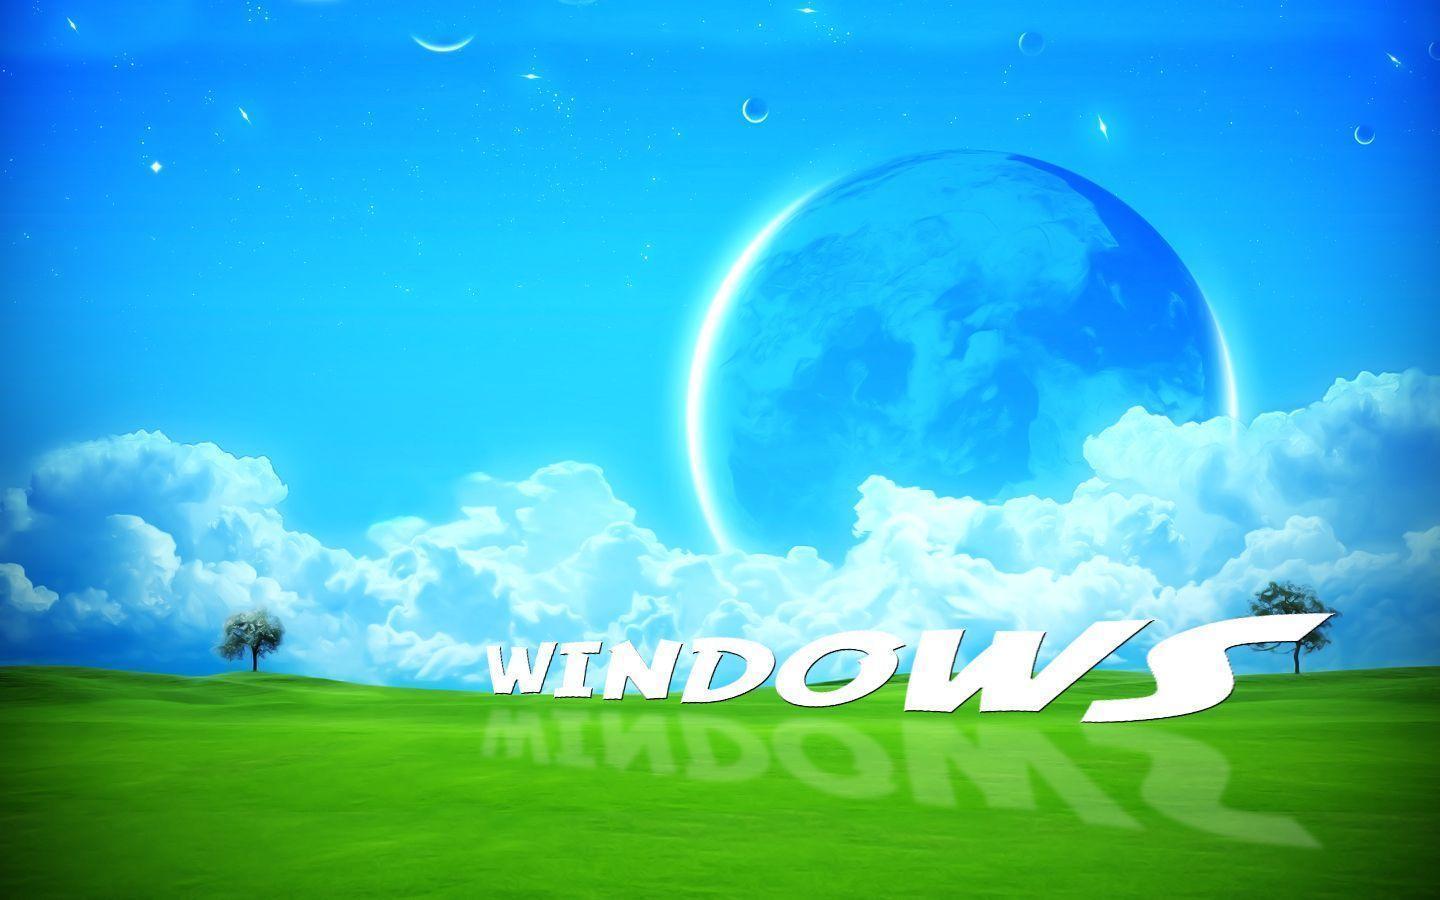 Wallpaper For > Animated Wallpaper For Desktop Windows Xp Free